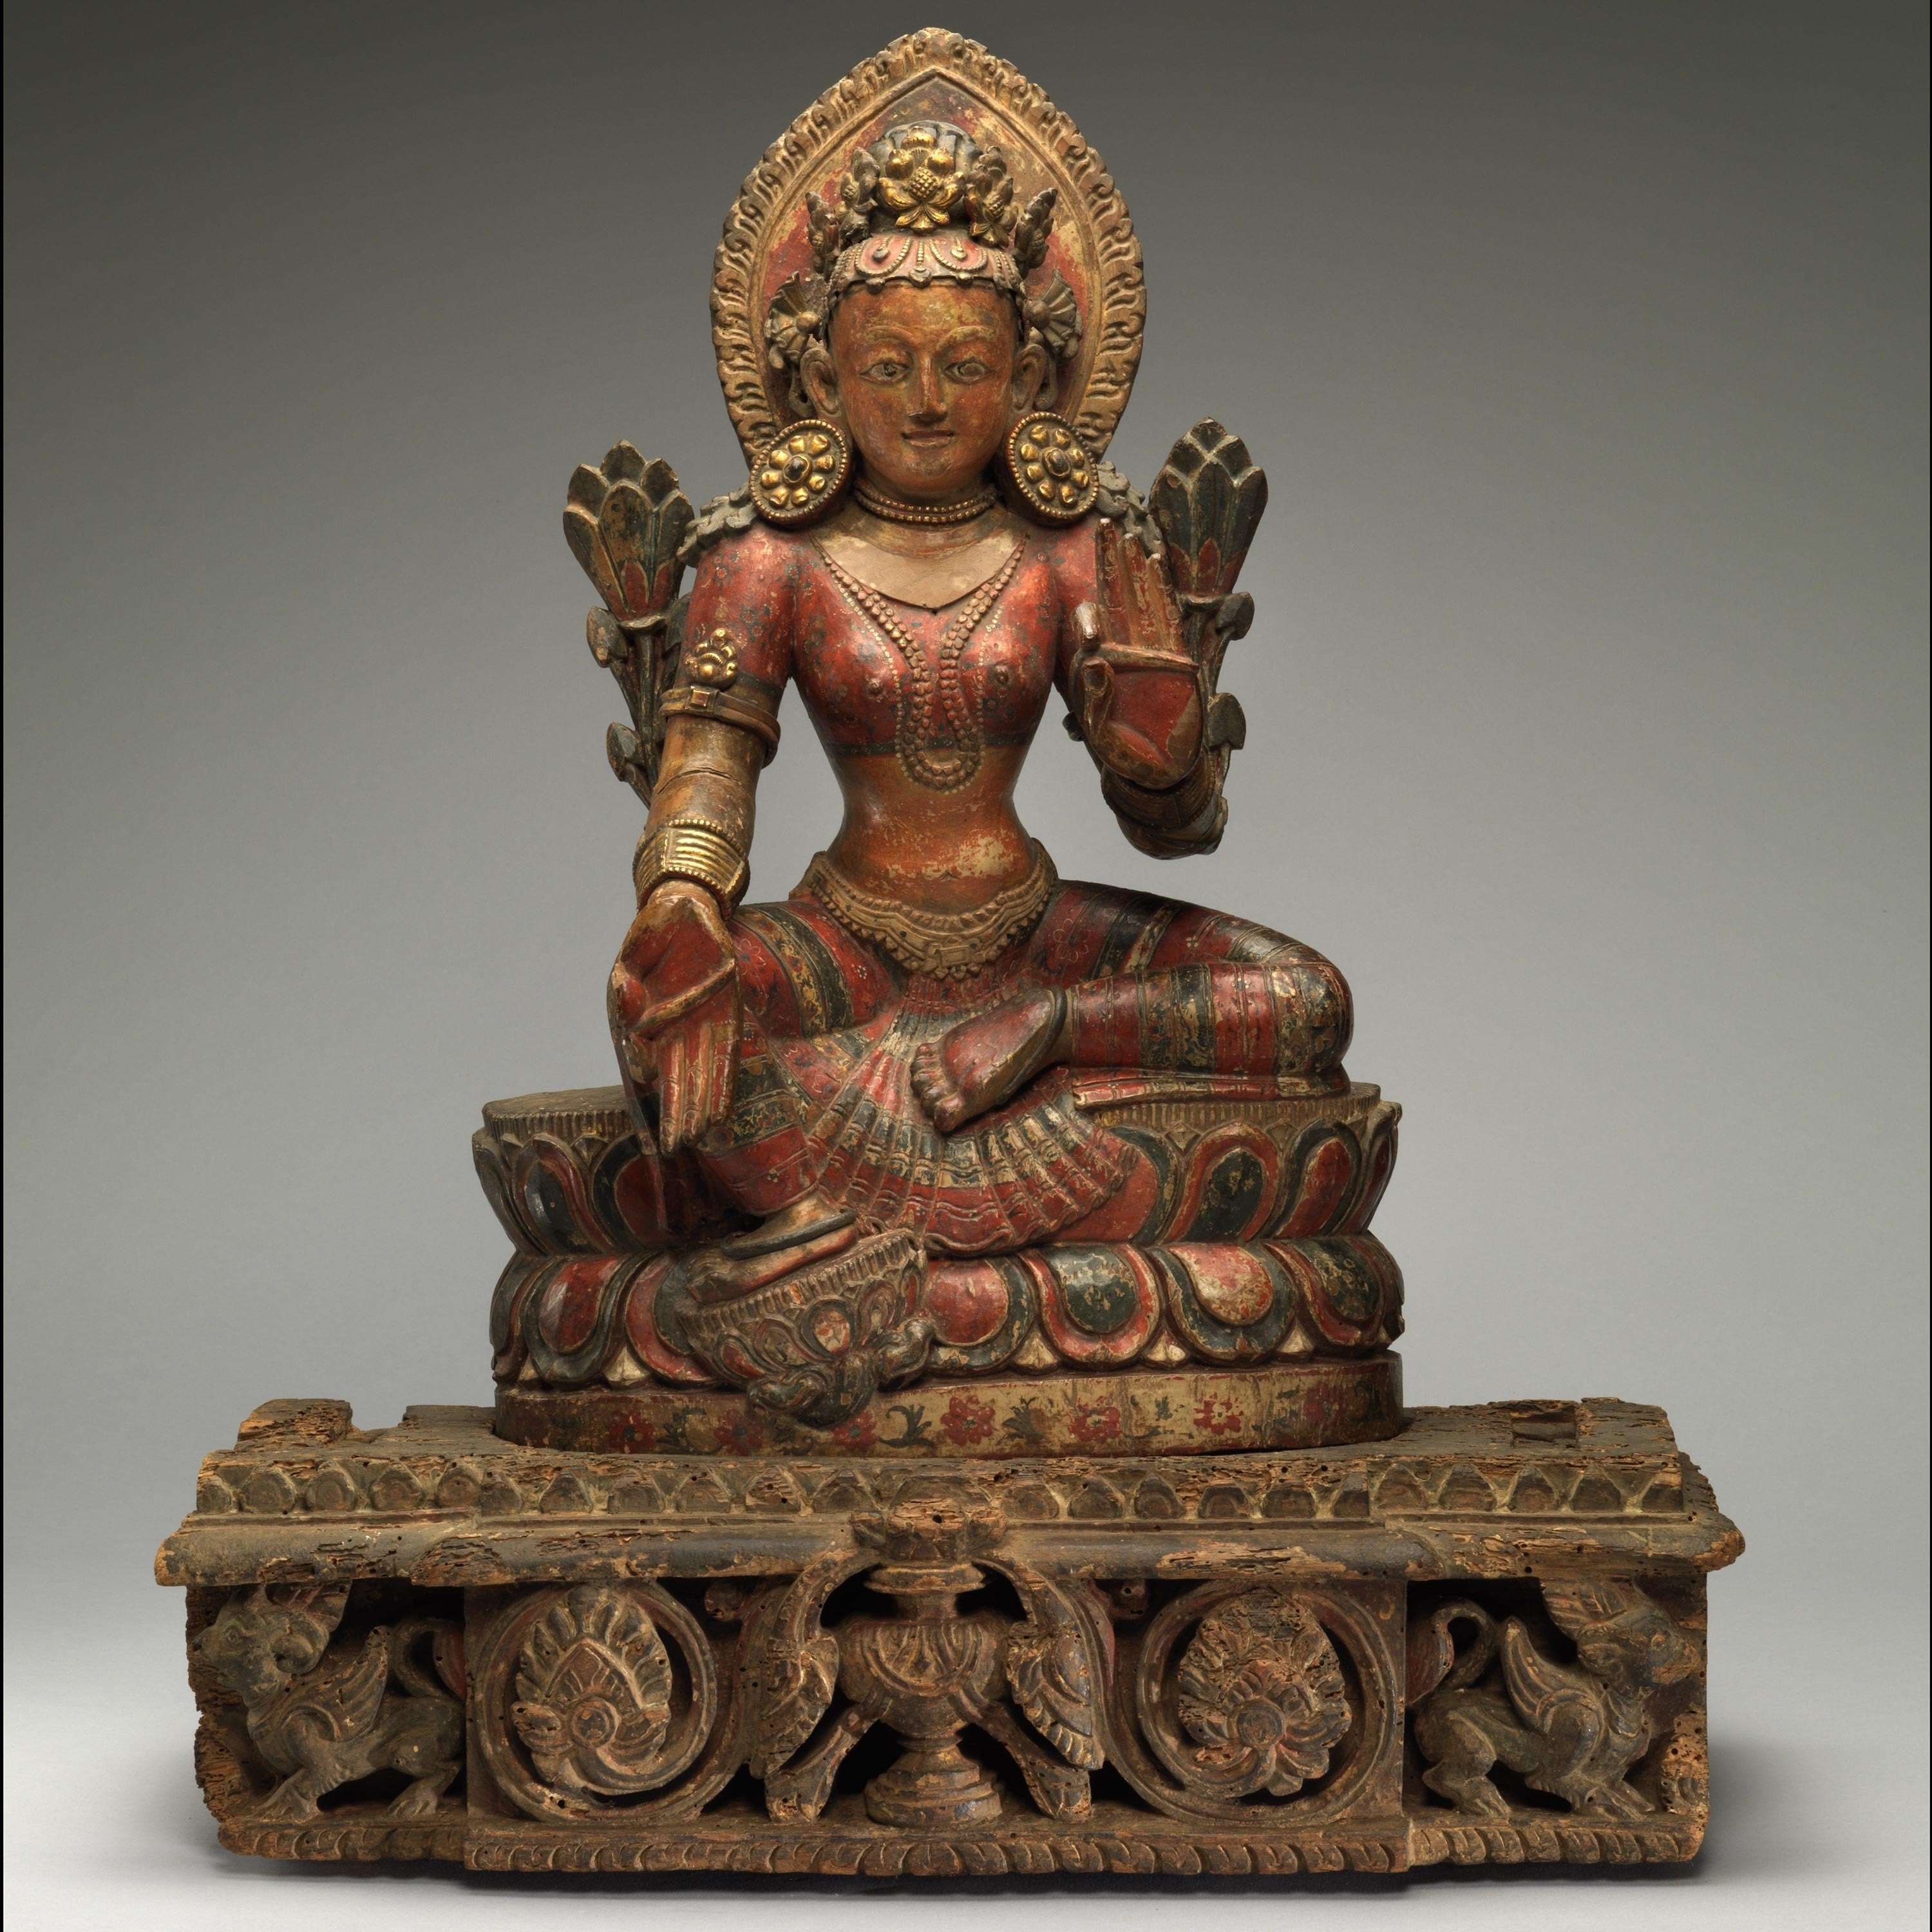 Mindfulness Meditation with Lama Aria Drolma 10/05/2020